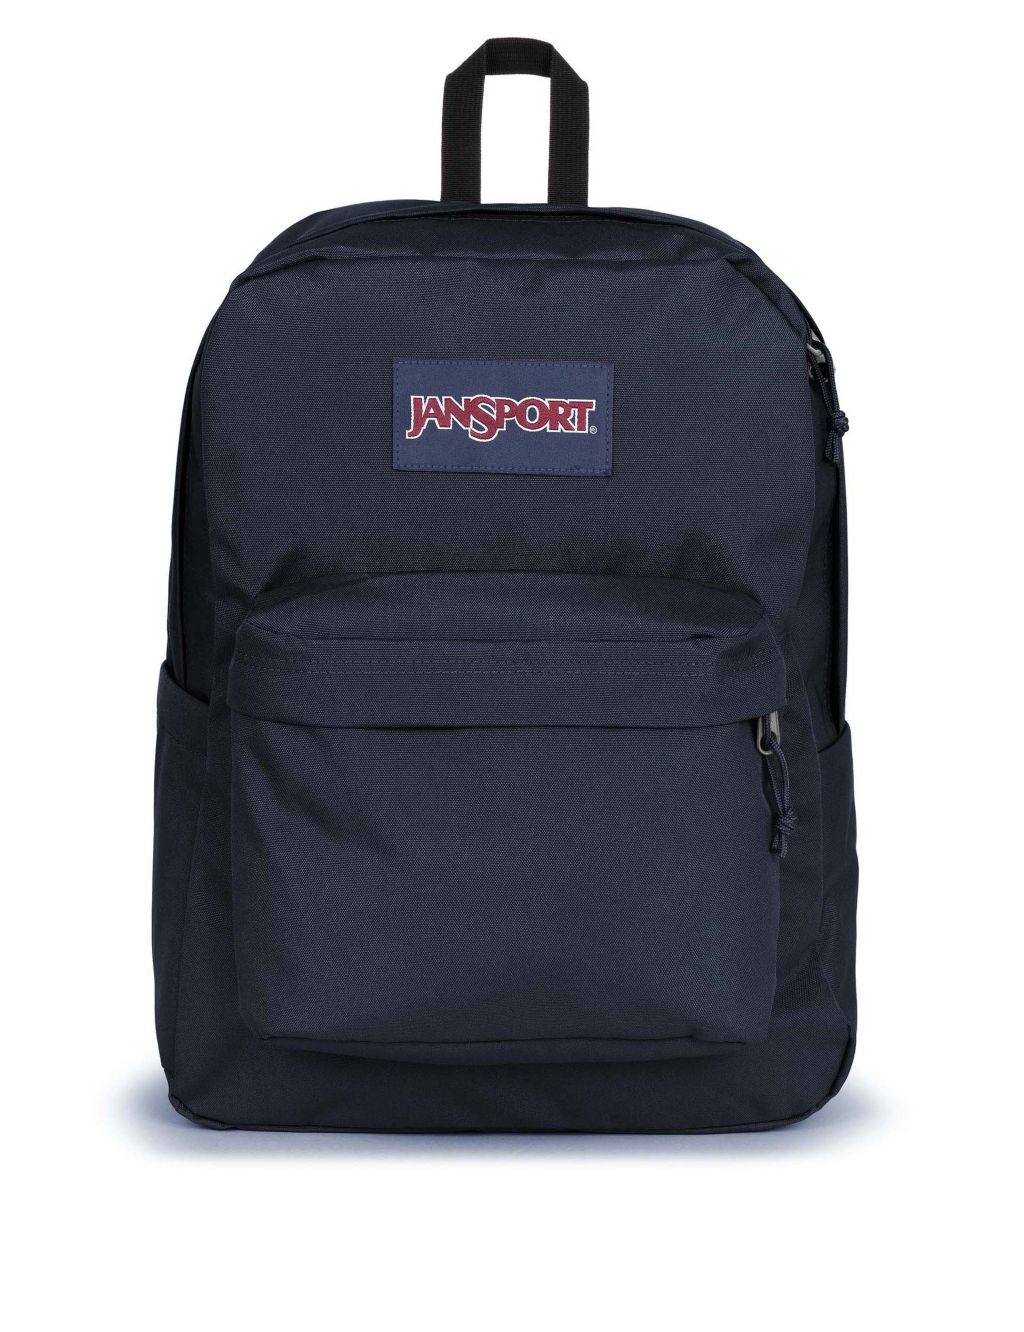 SuperBreak Plus Backpack image 1